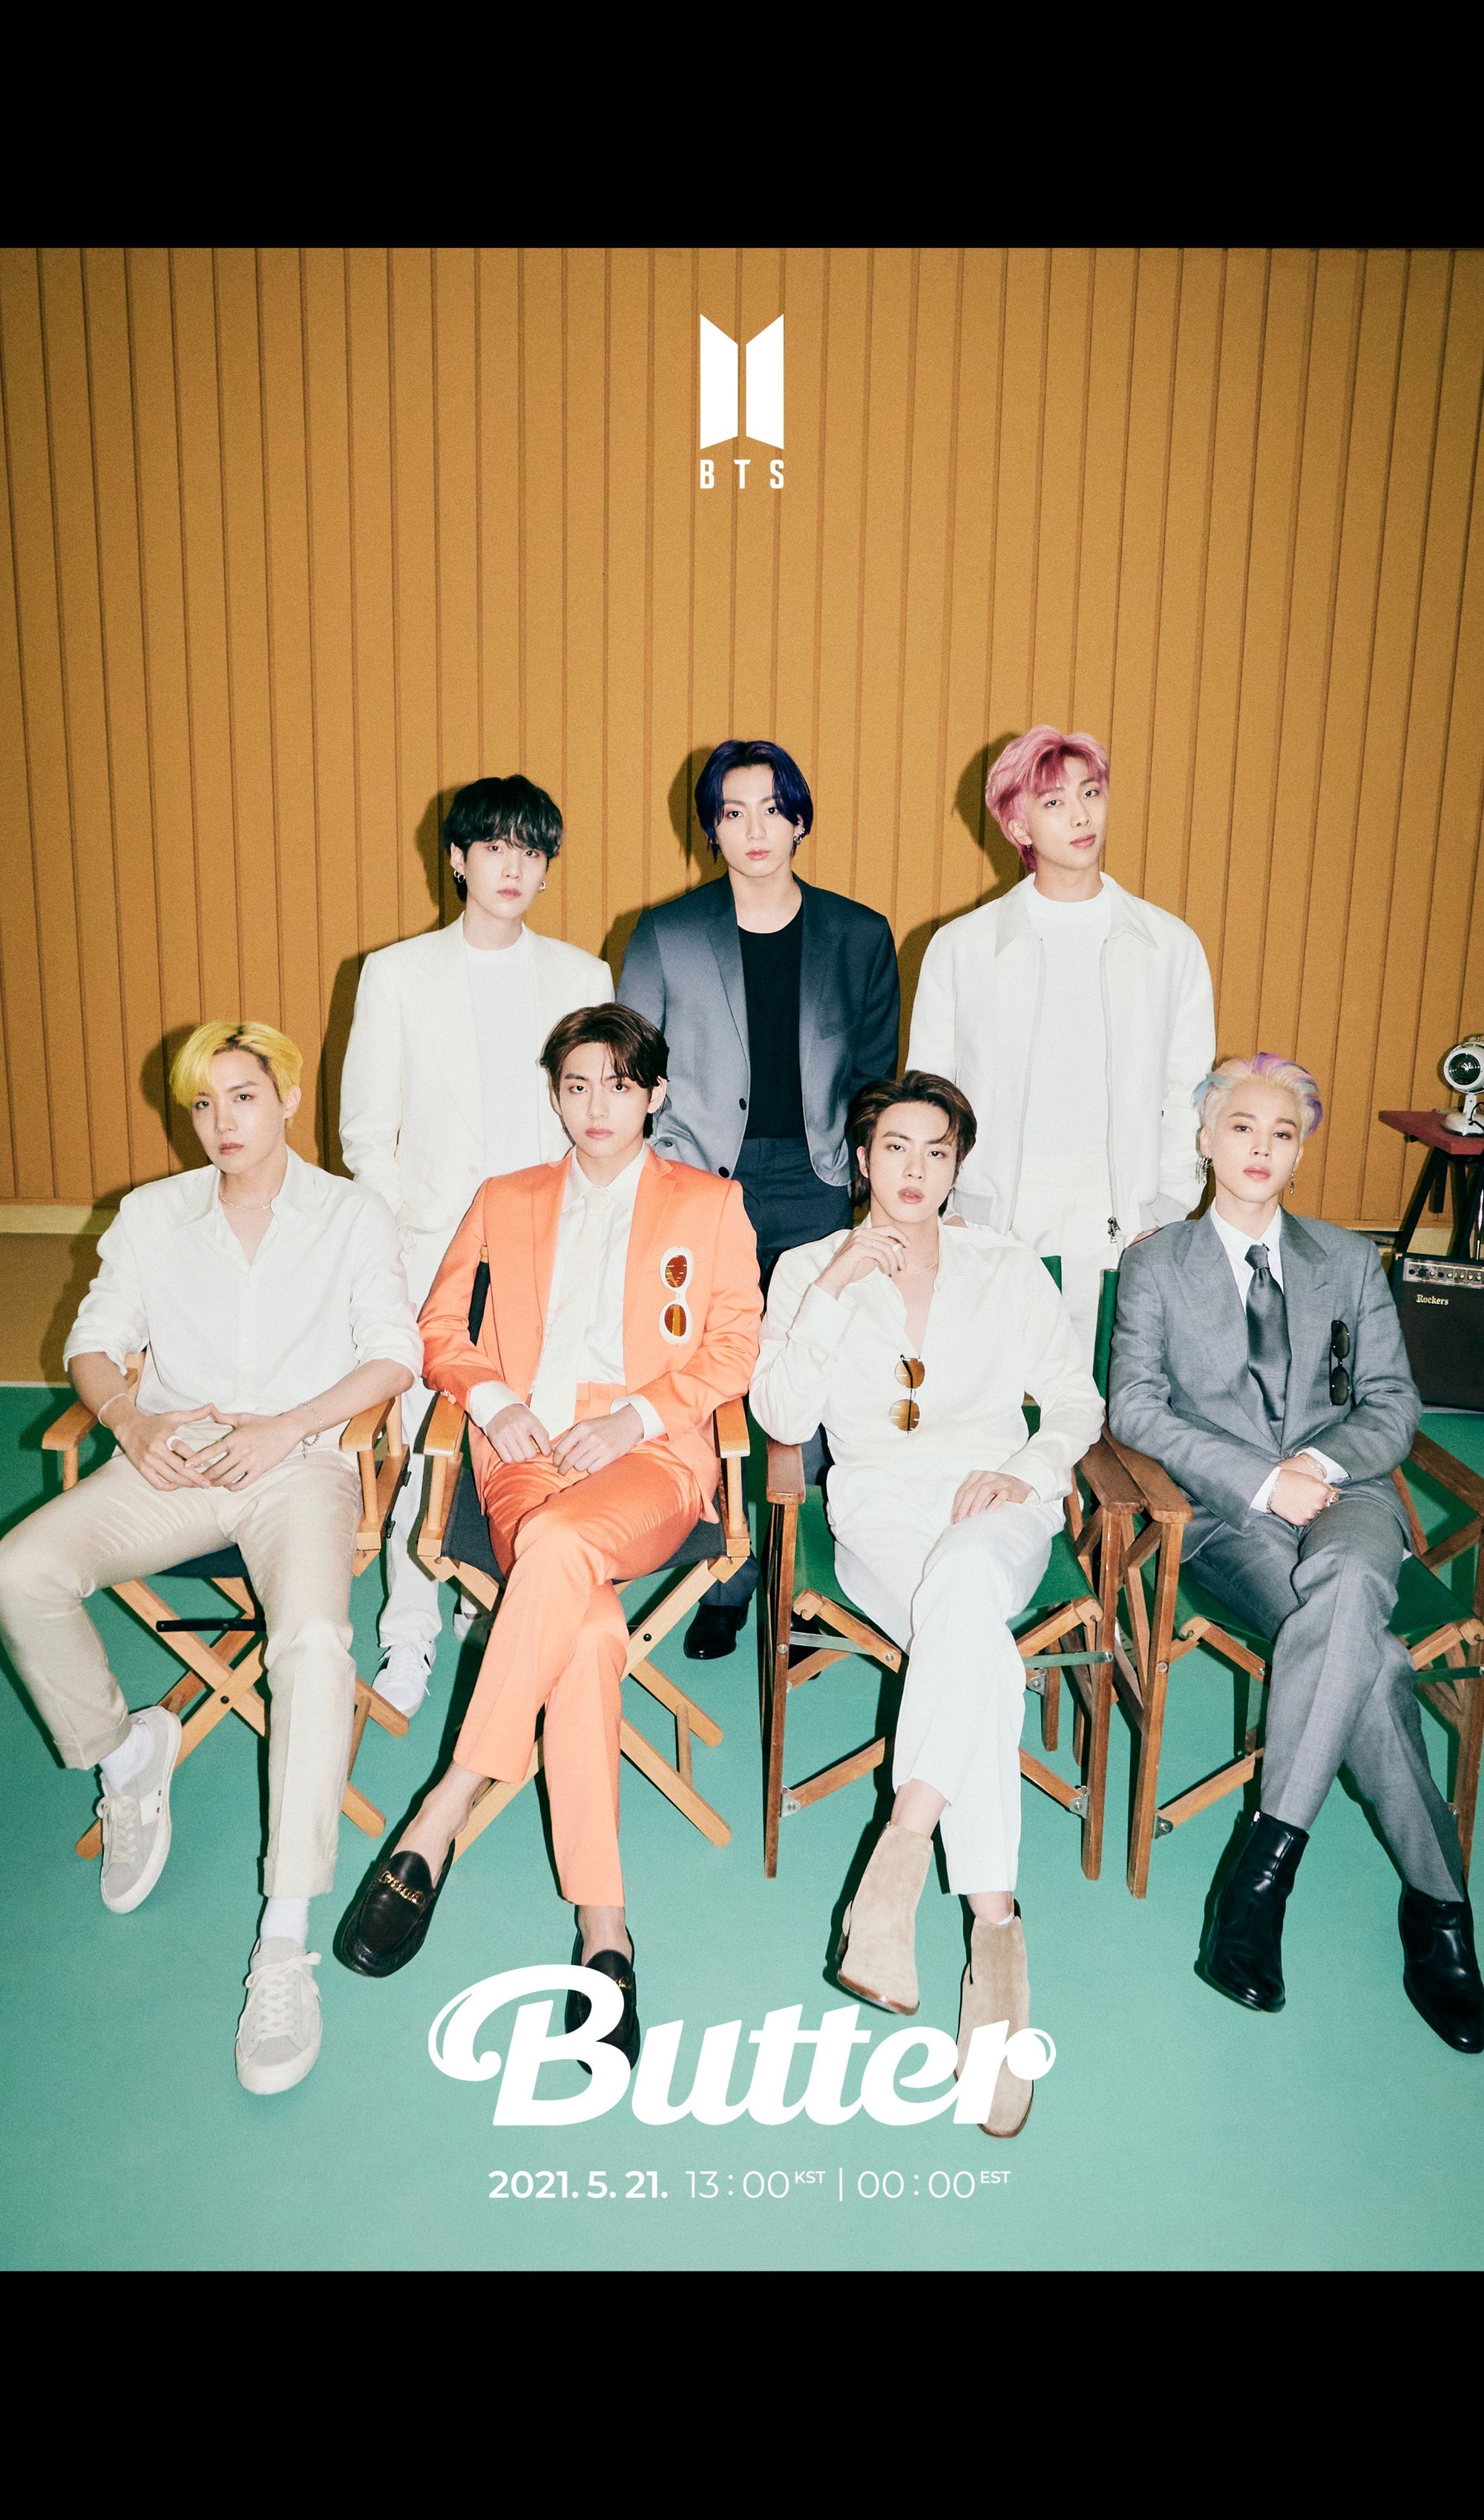 BTS [BUTTER] CONCEPT PHOTOS | K-PopMag